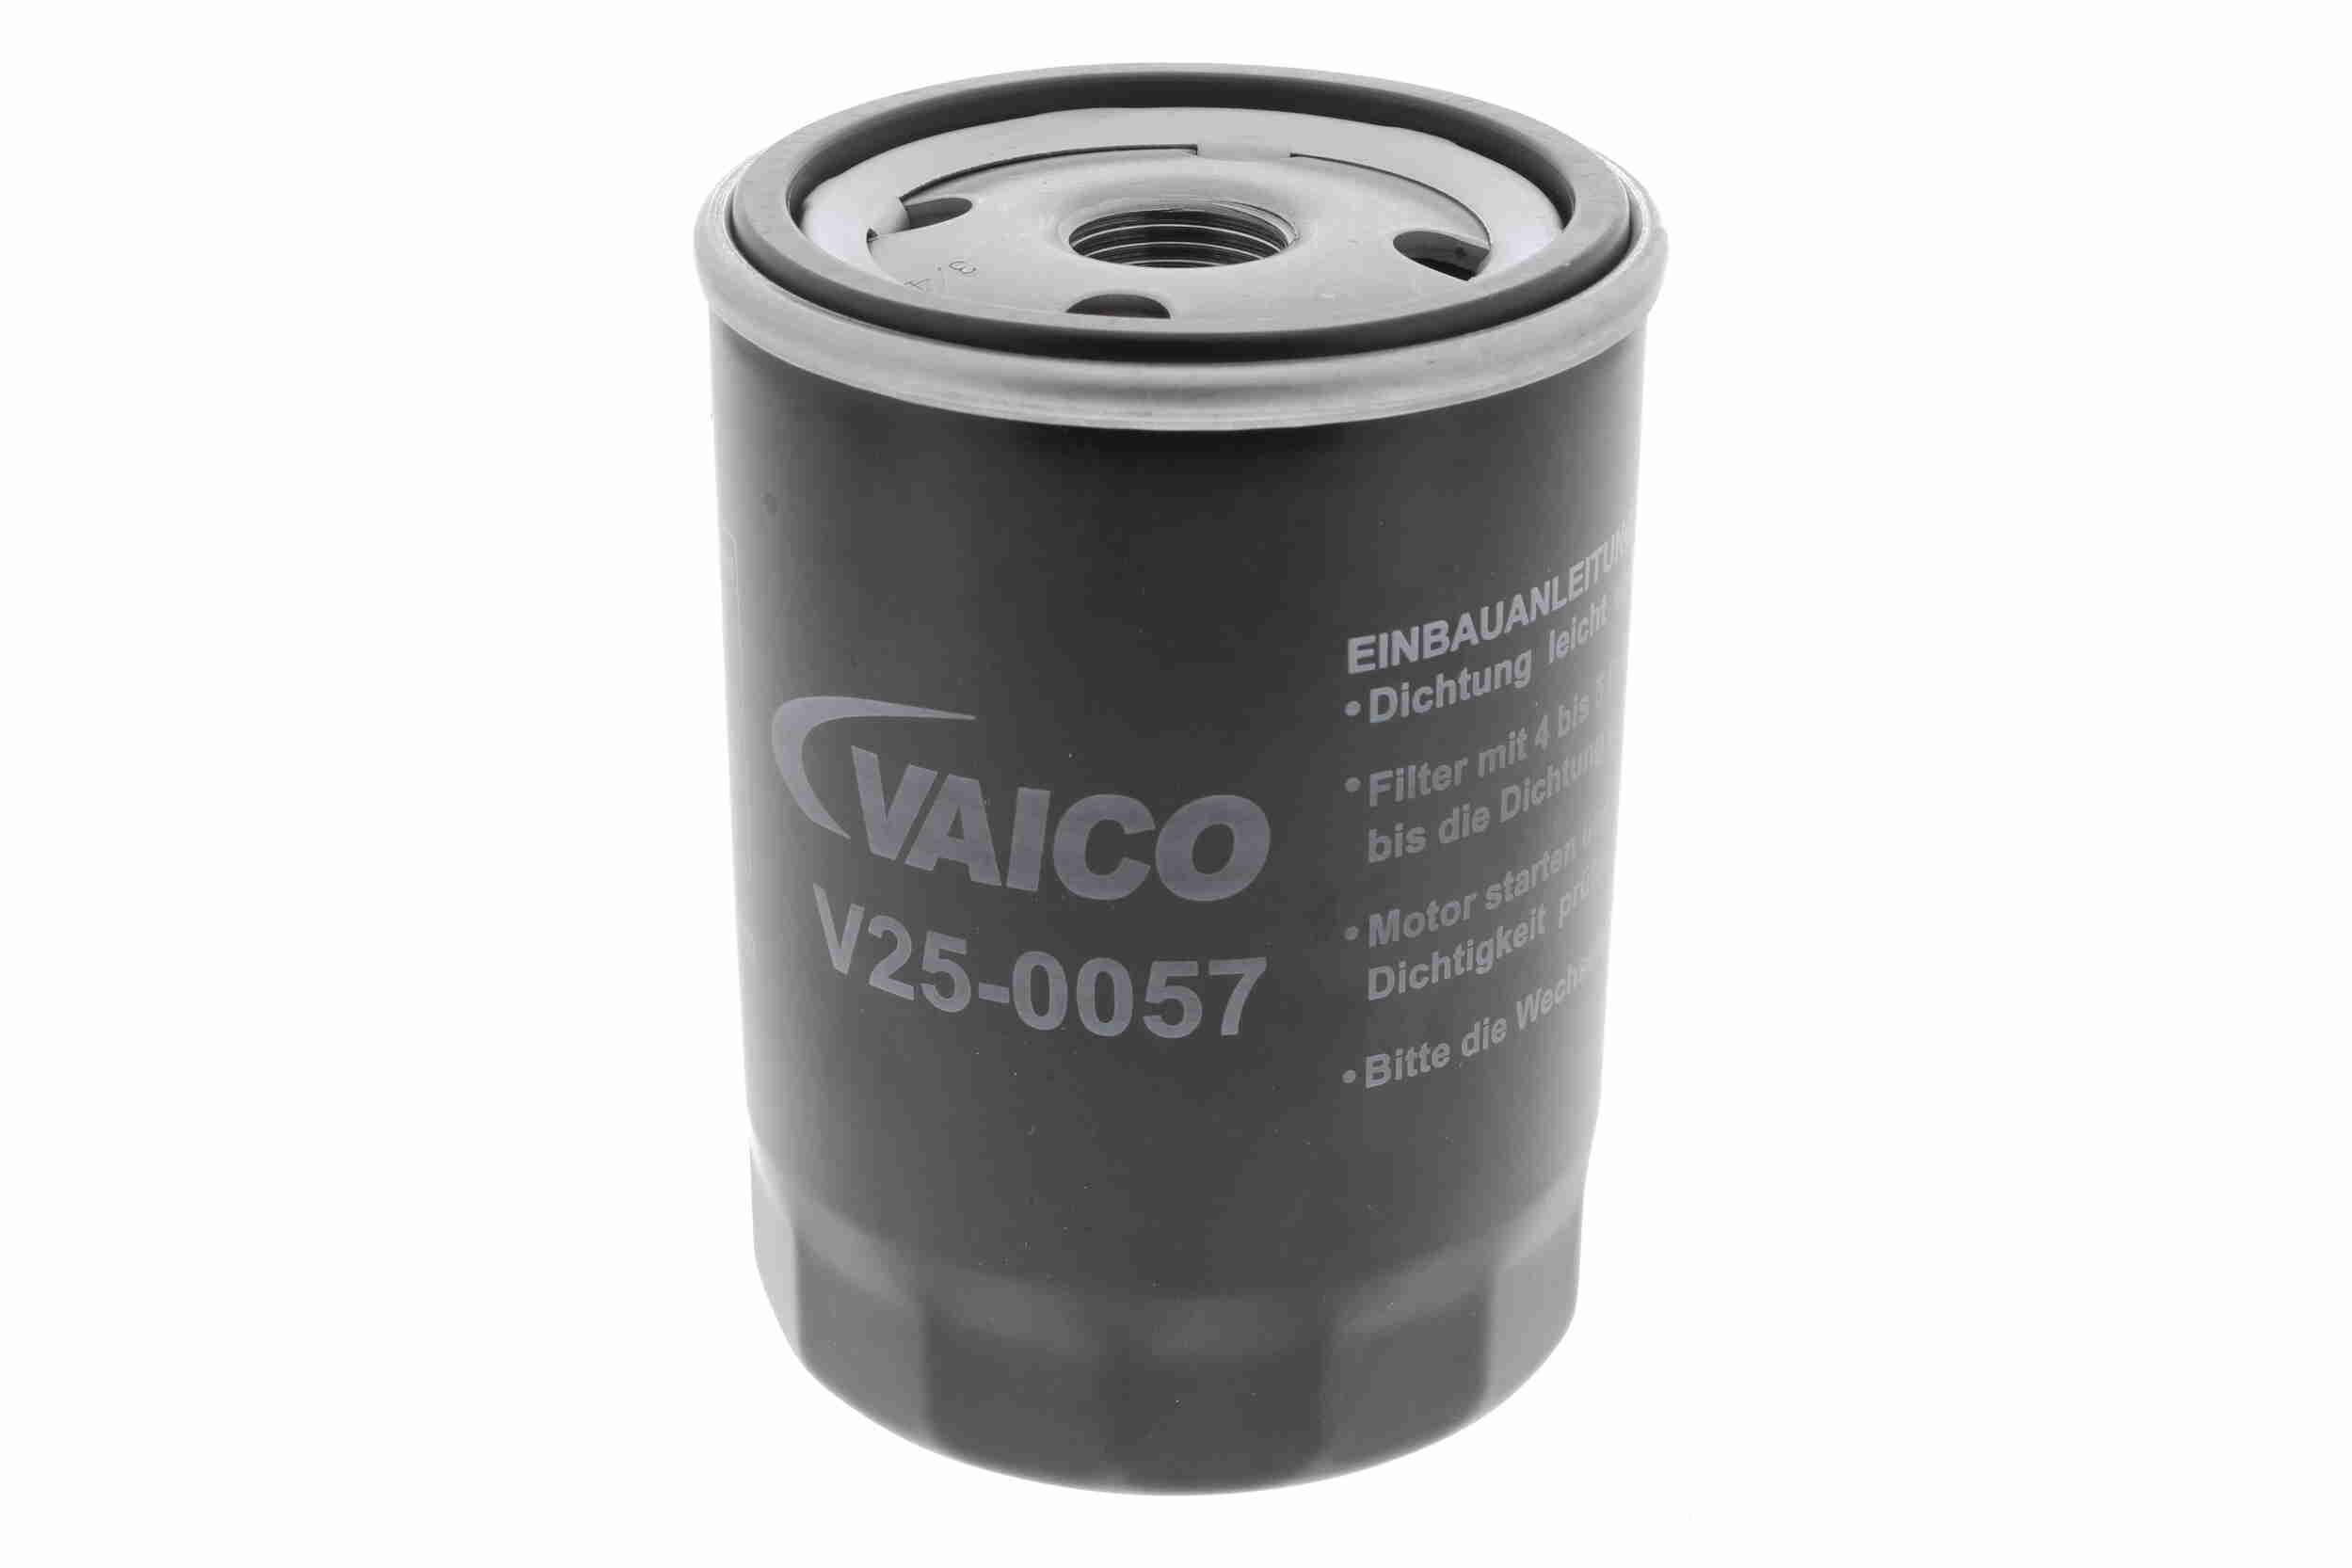 VAICO V25-0057 Oil filter 3/4-16 UNF, Original VAICO Quality, with one anti-return valve, Spin-on Filter